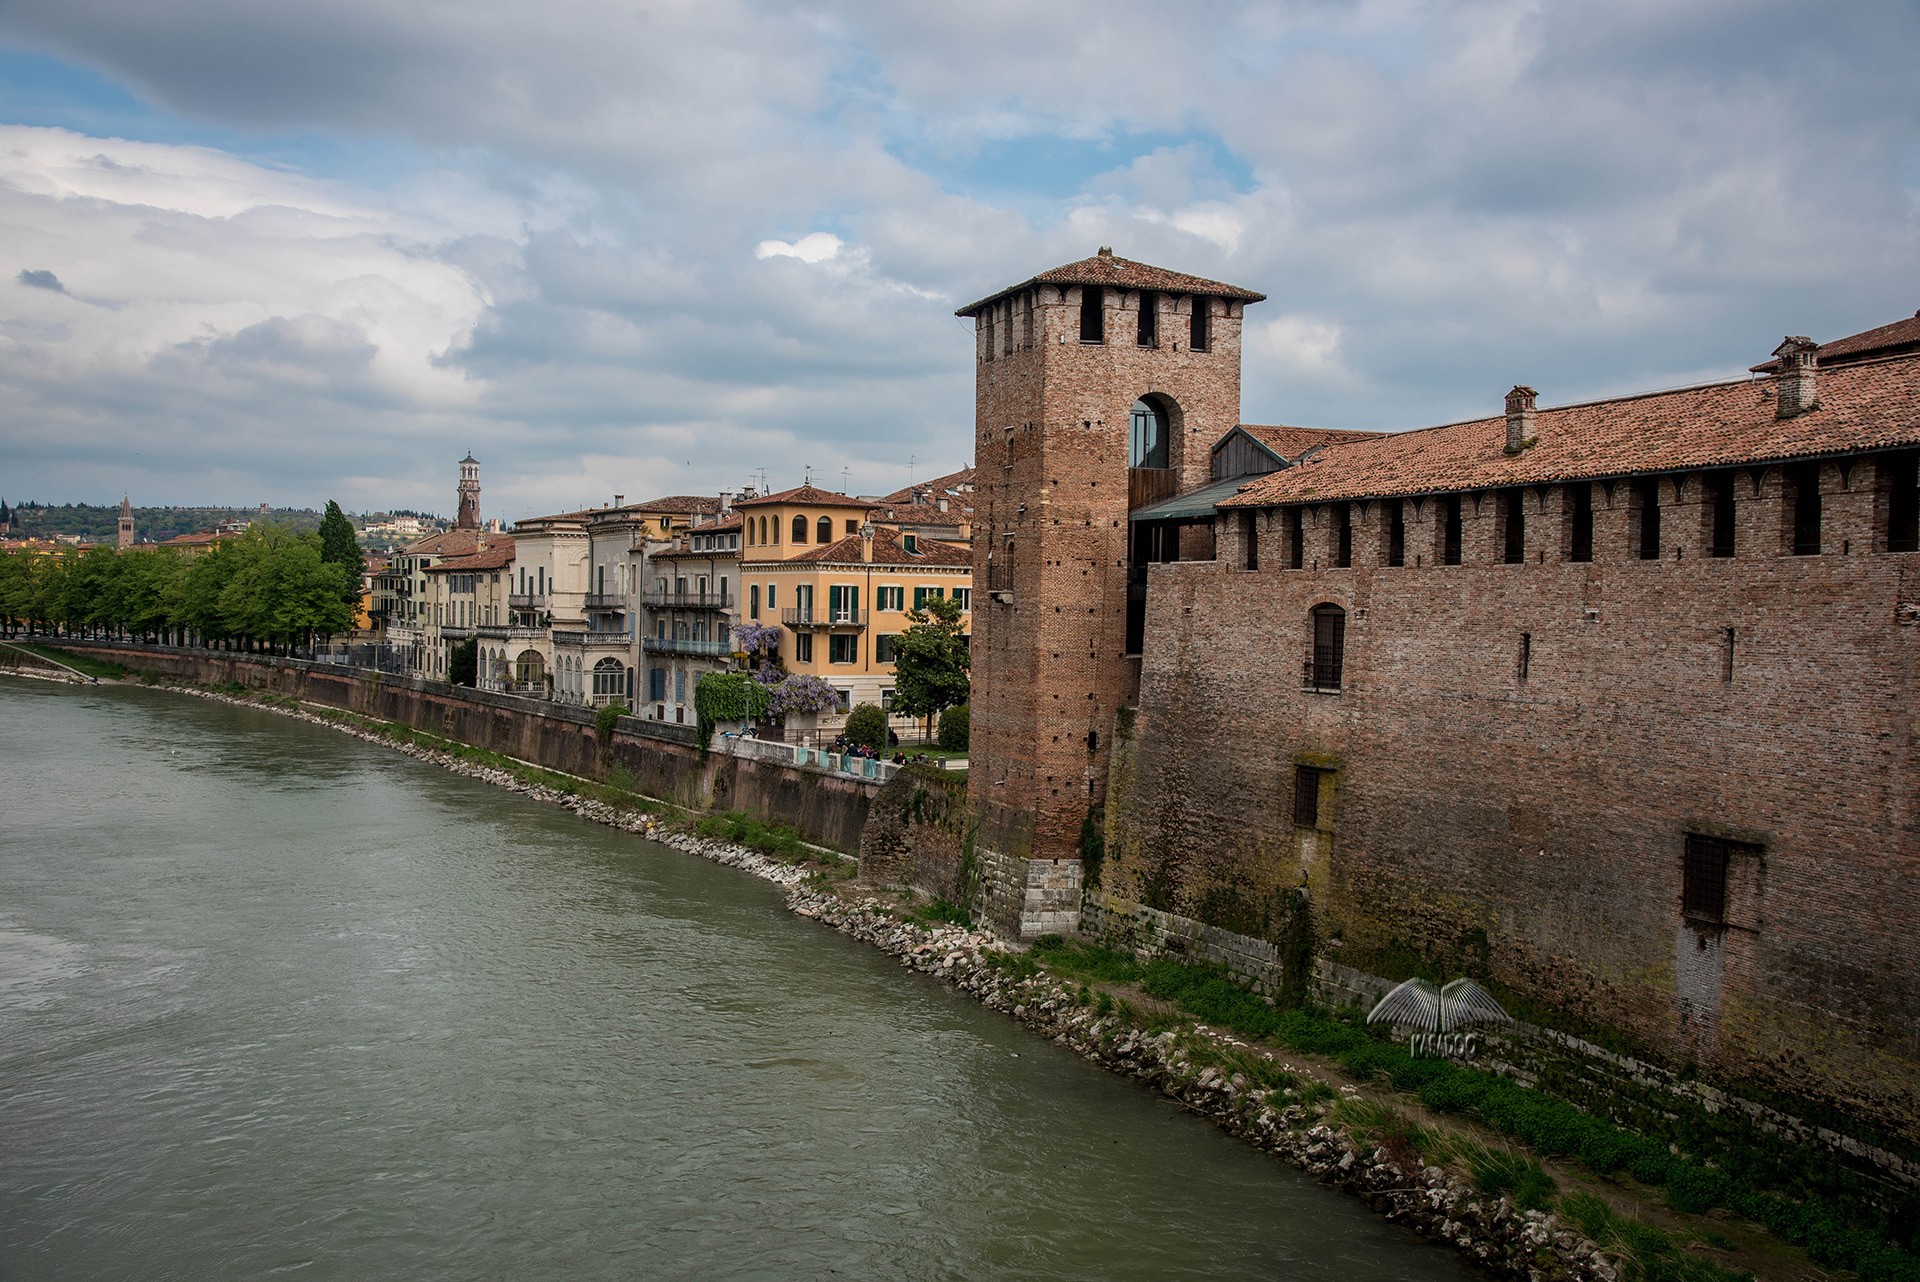 The view from Castelvecchio Bridge